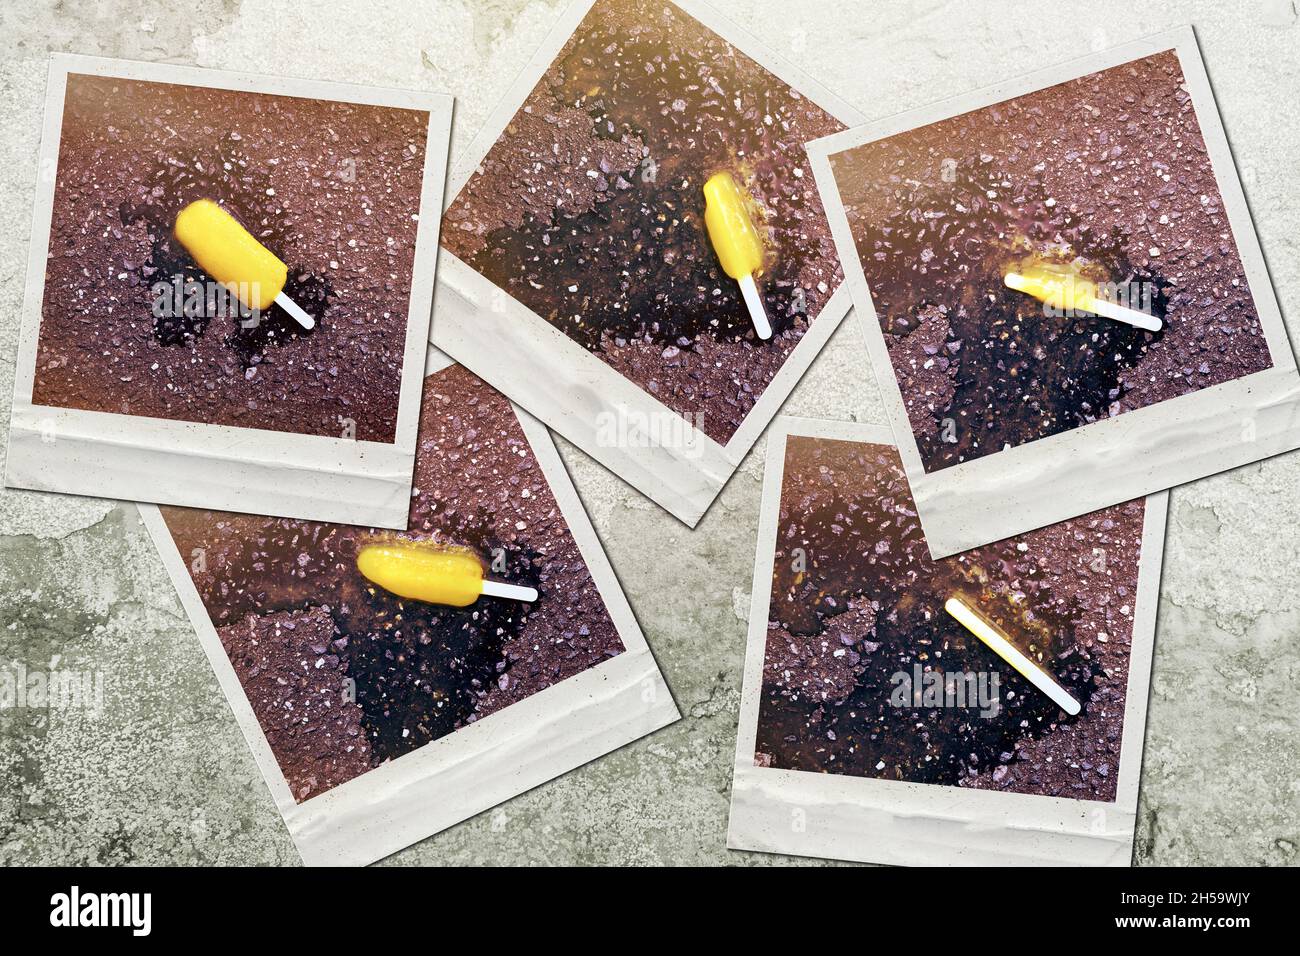 FOTOMONTAGE, Polaroidfotos mit schmelzendem Eis am Stiel, Symbolfoto Hitzewelle Stock Photo